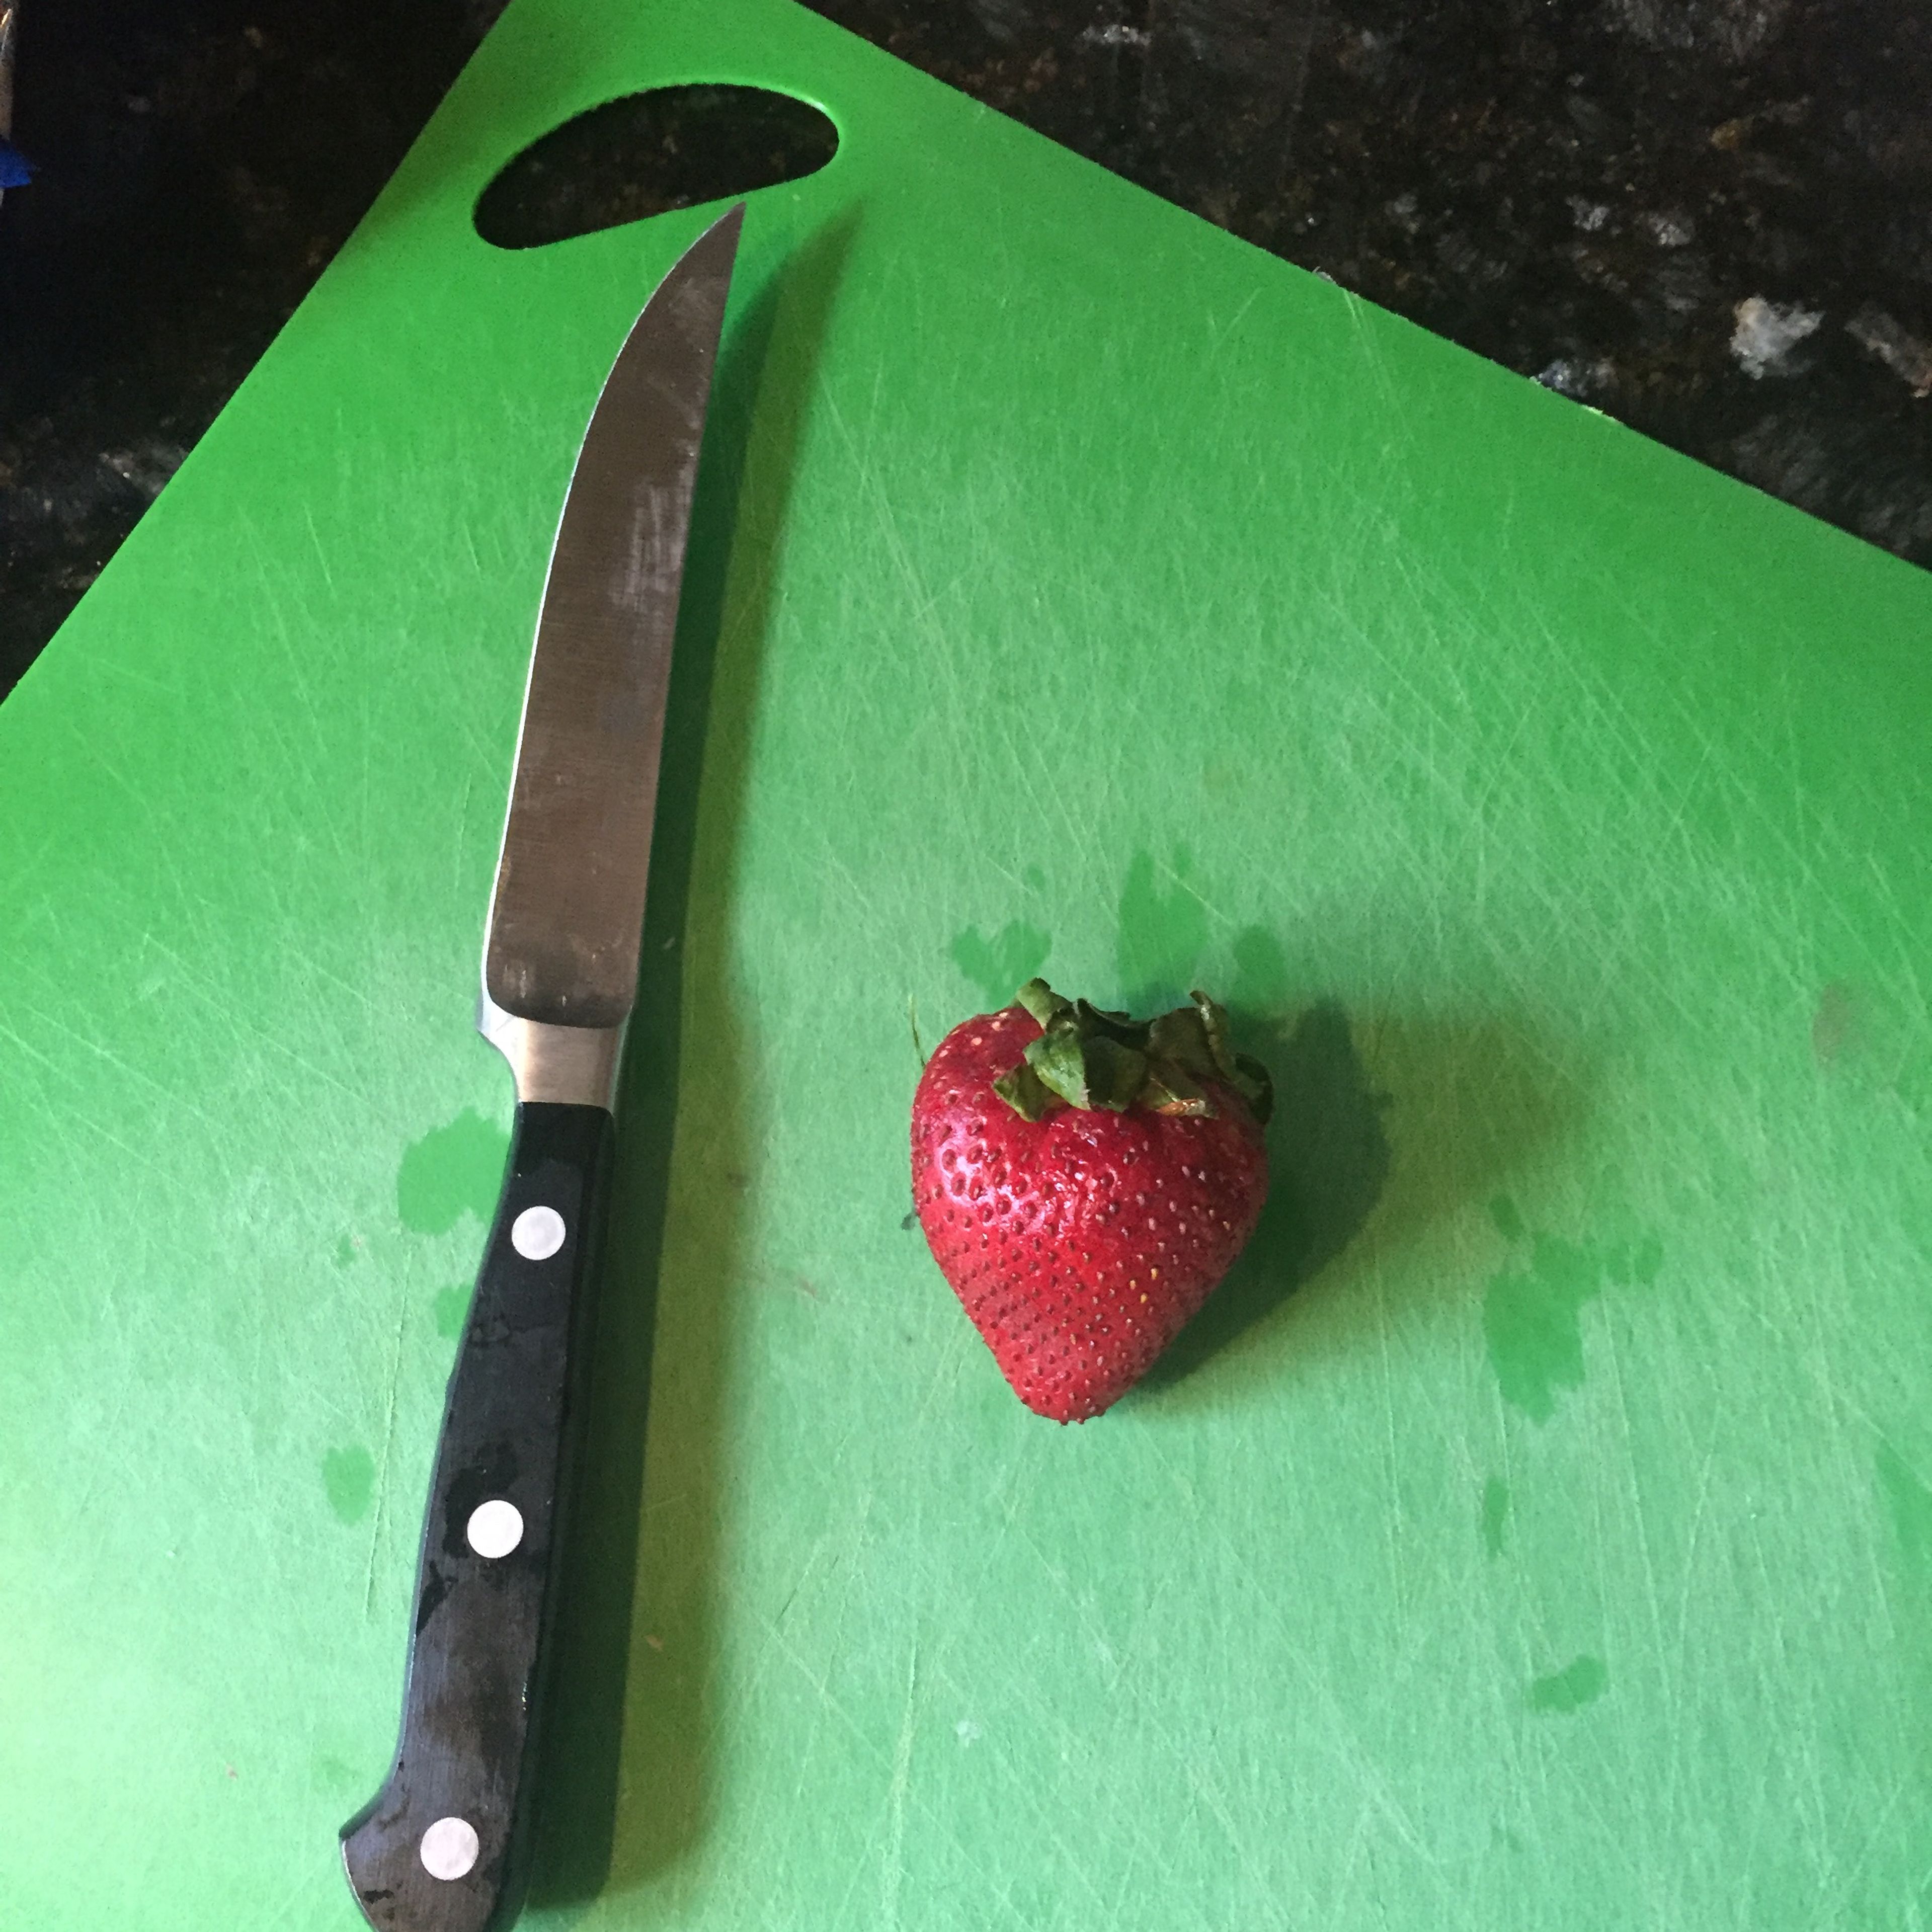 Chop strawberry’s